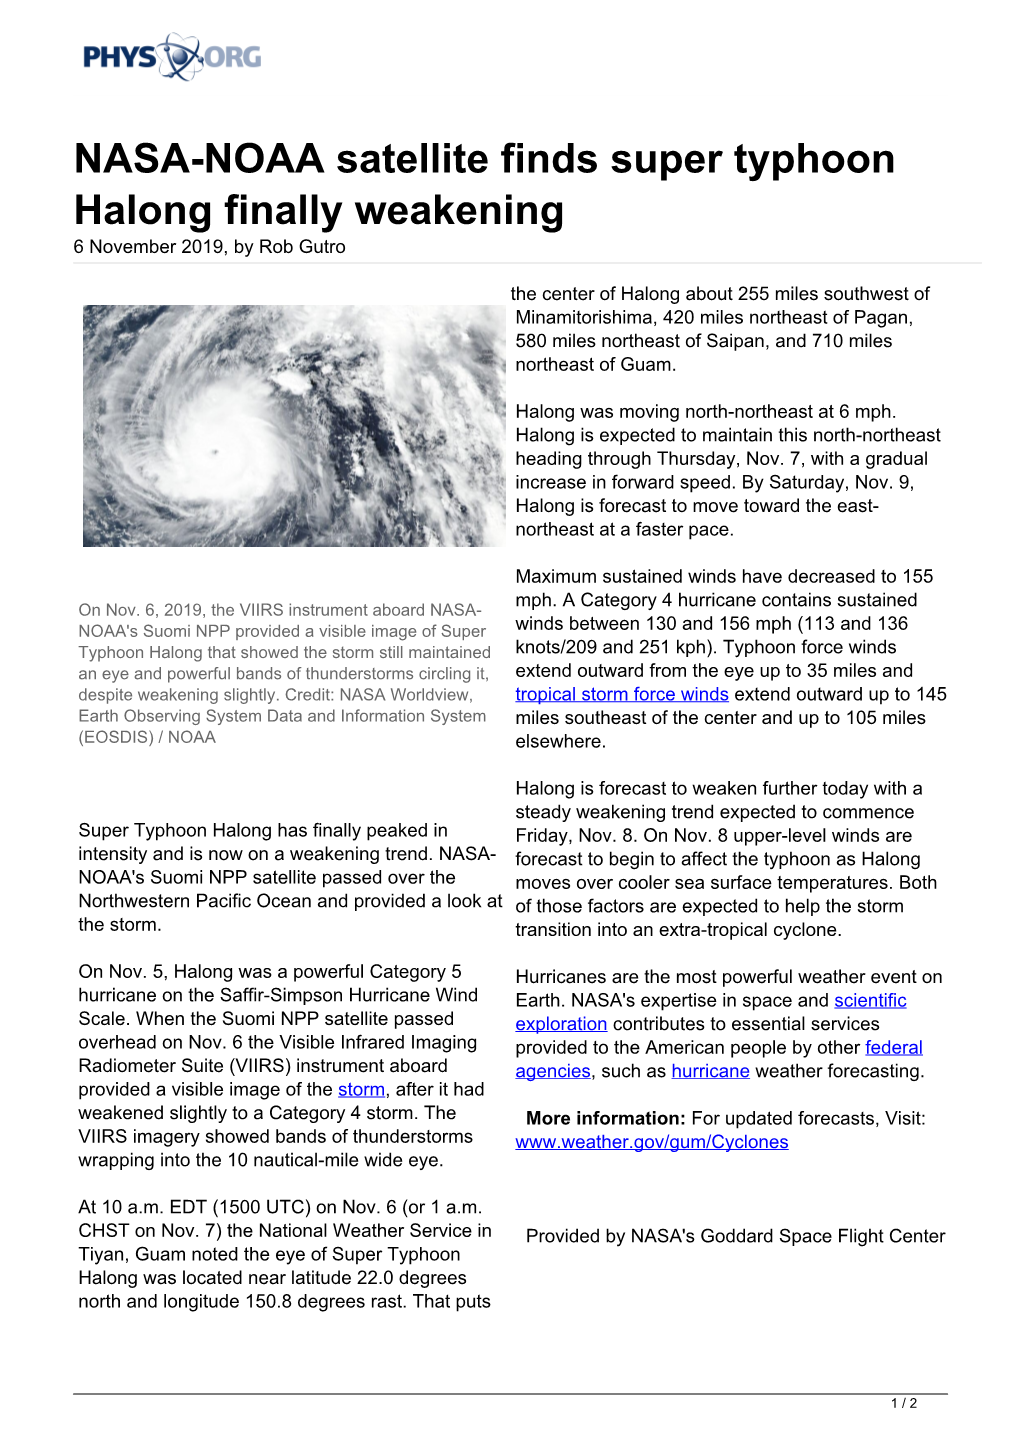 NASA-NOAA Satellite Finds Super Typhoon Halong Finally Weakening 6 November 2019, by Rob Gutro